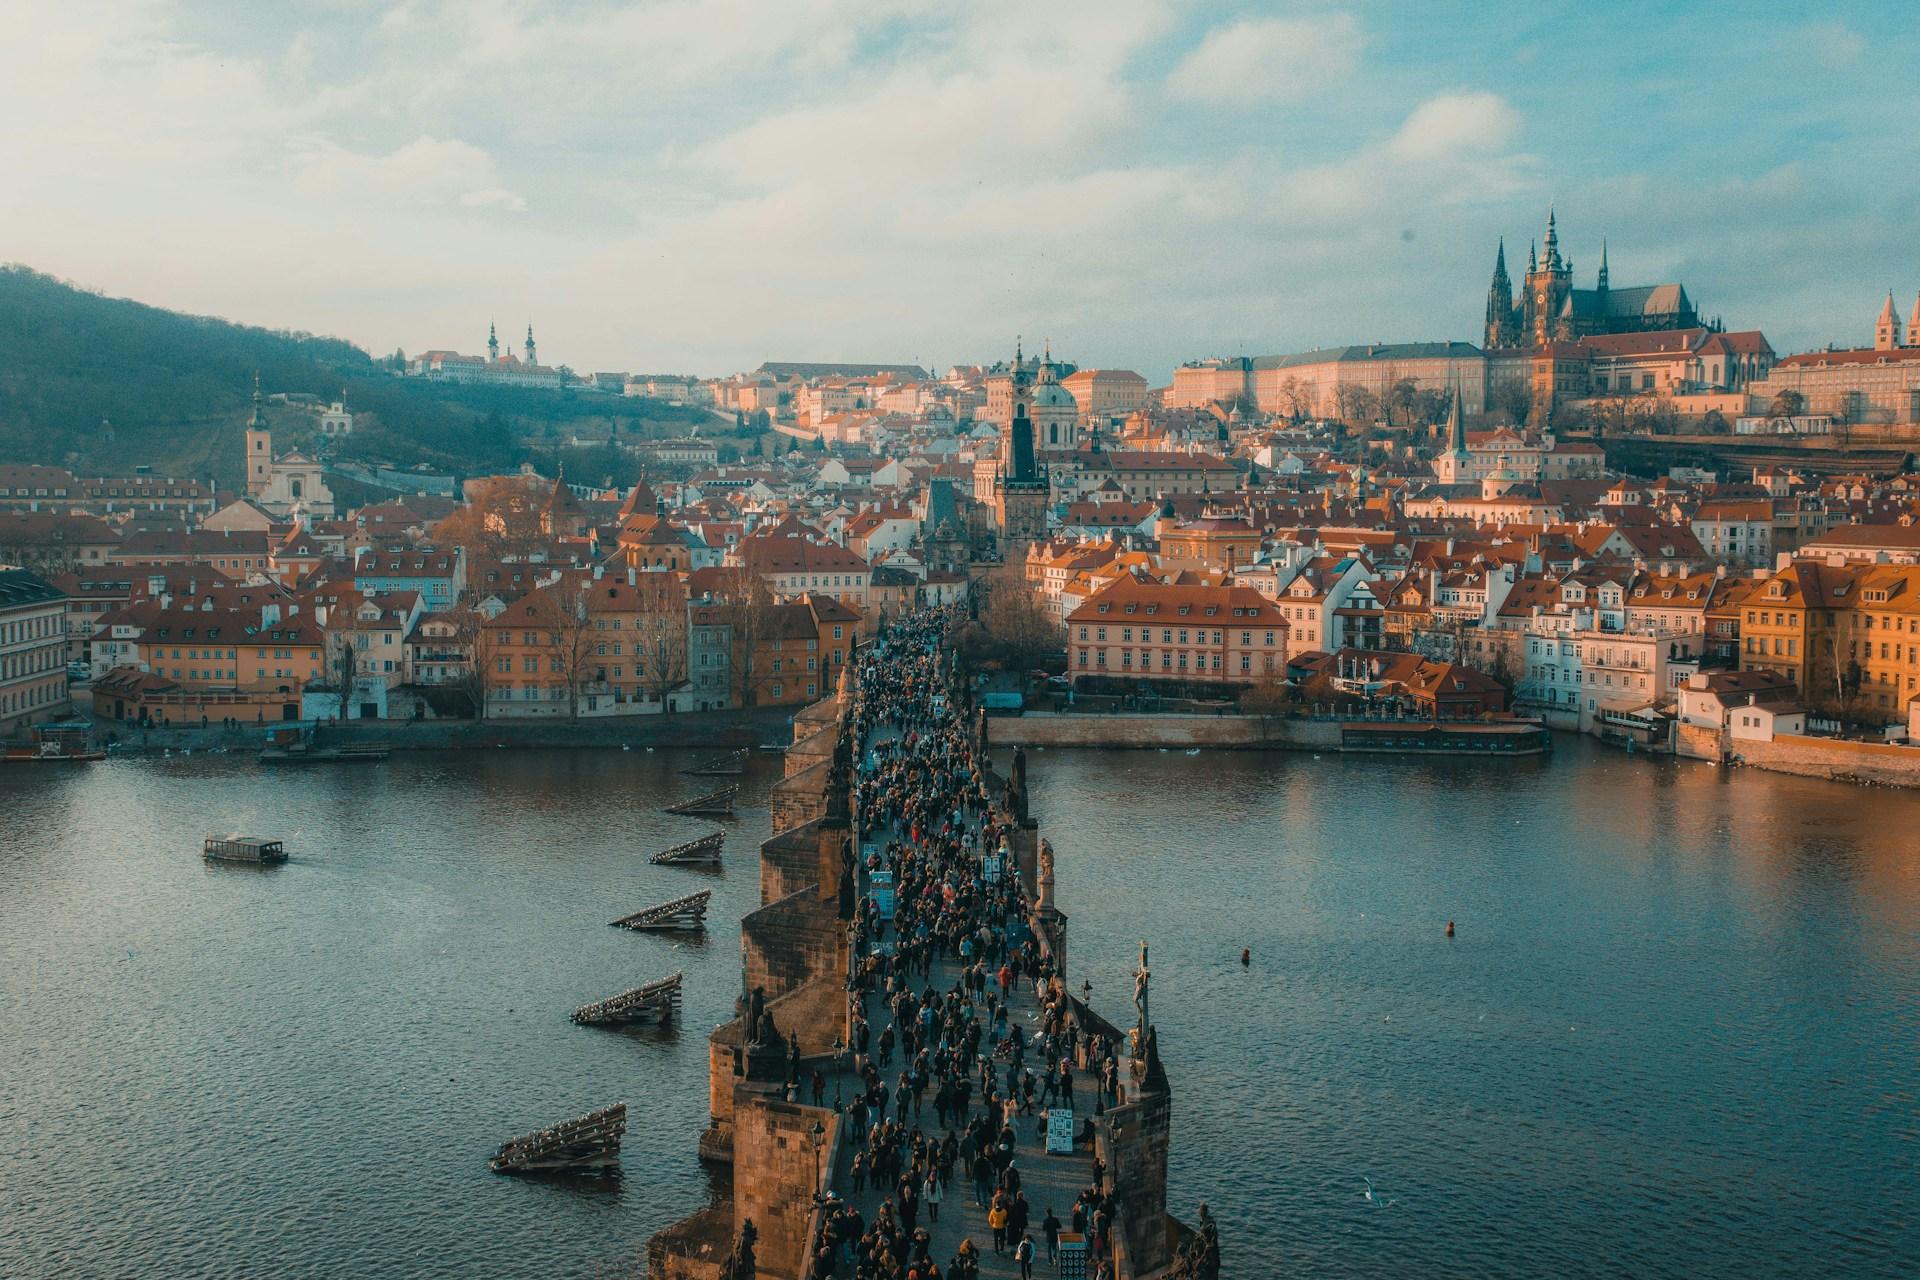 Prague - Harmony of architecture